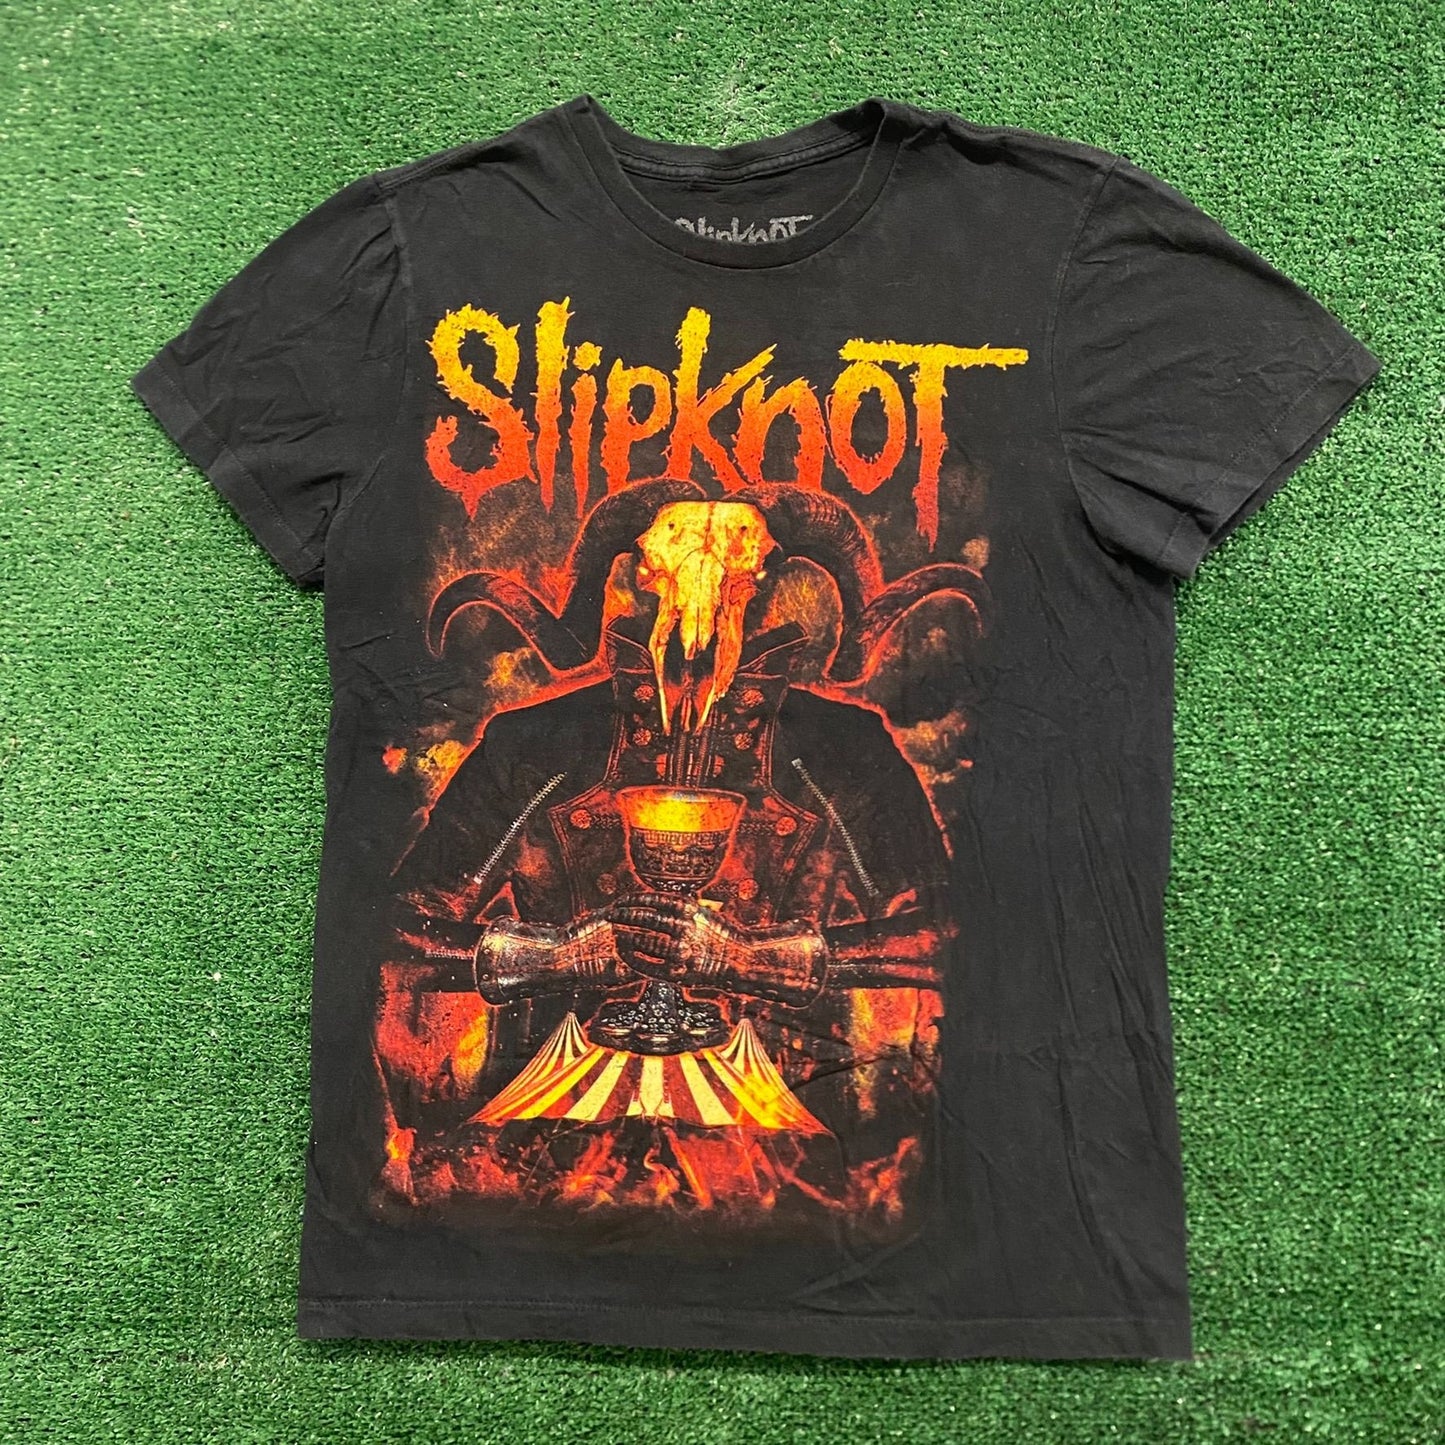 Thrift Metal Band – Agent Vintage Slipknot T-Shirt